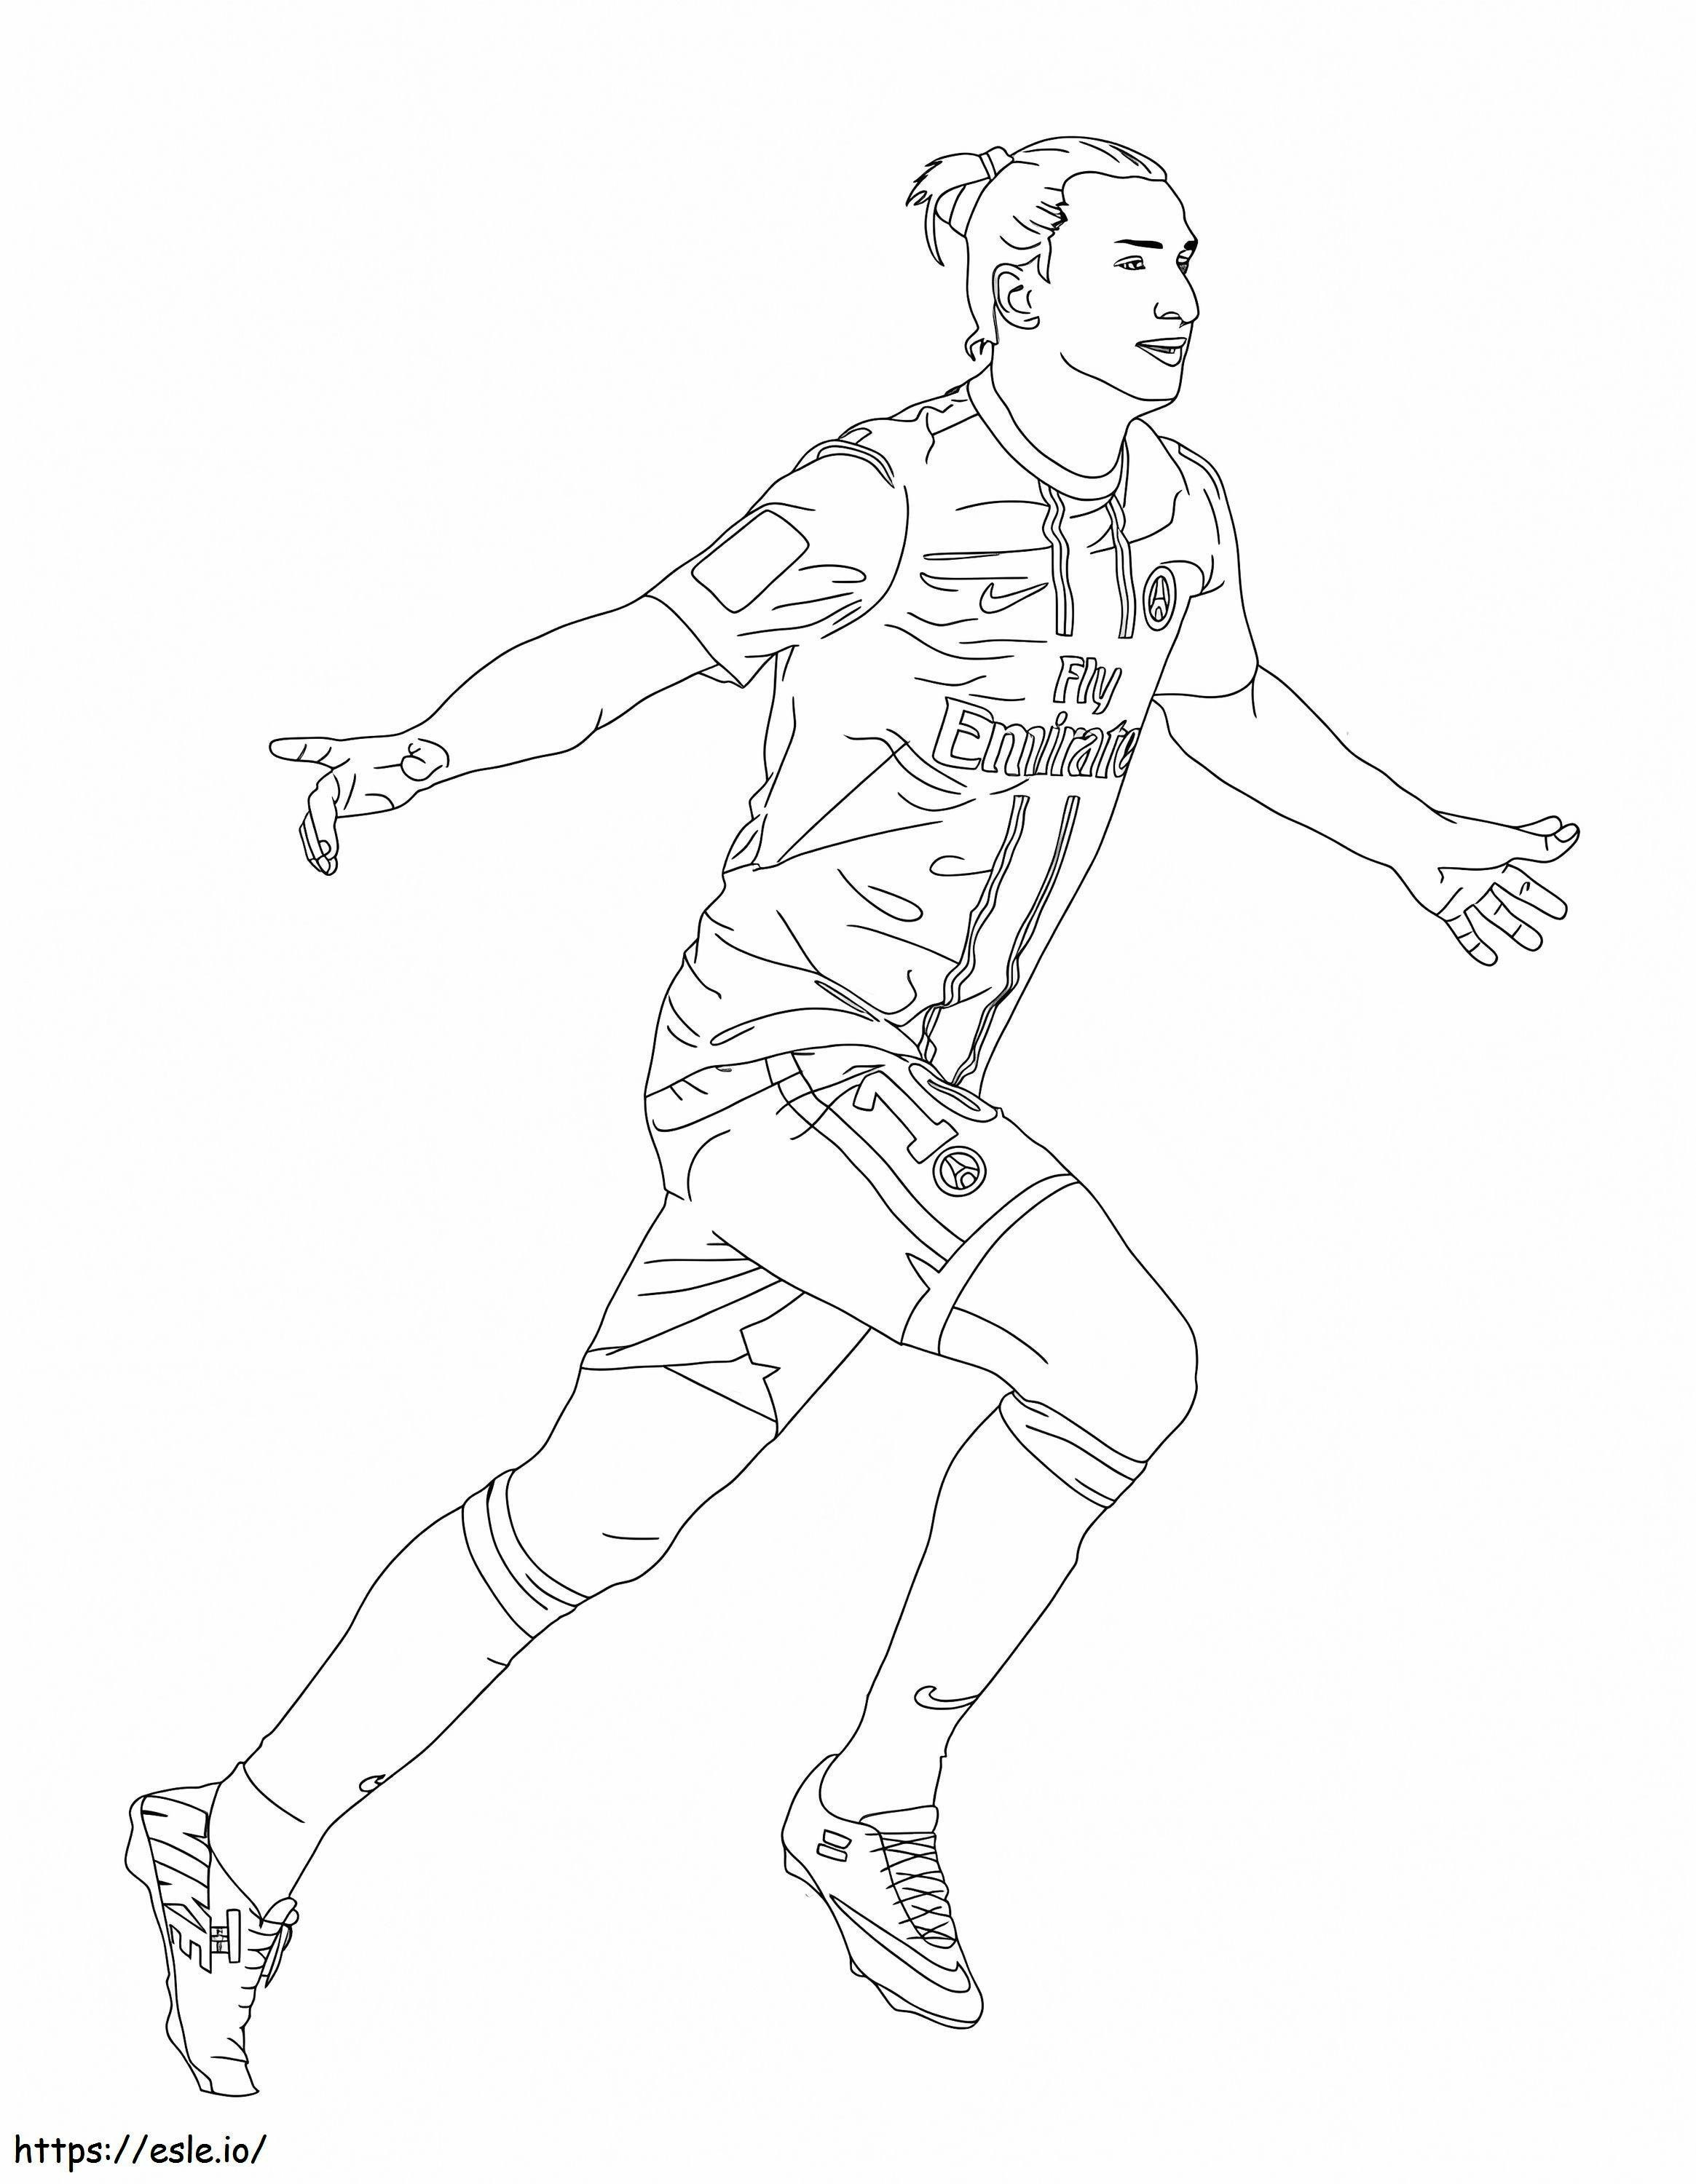 Coloriage Zlatan Ibrahimovic 2 à imprimer dessin